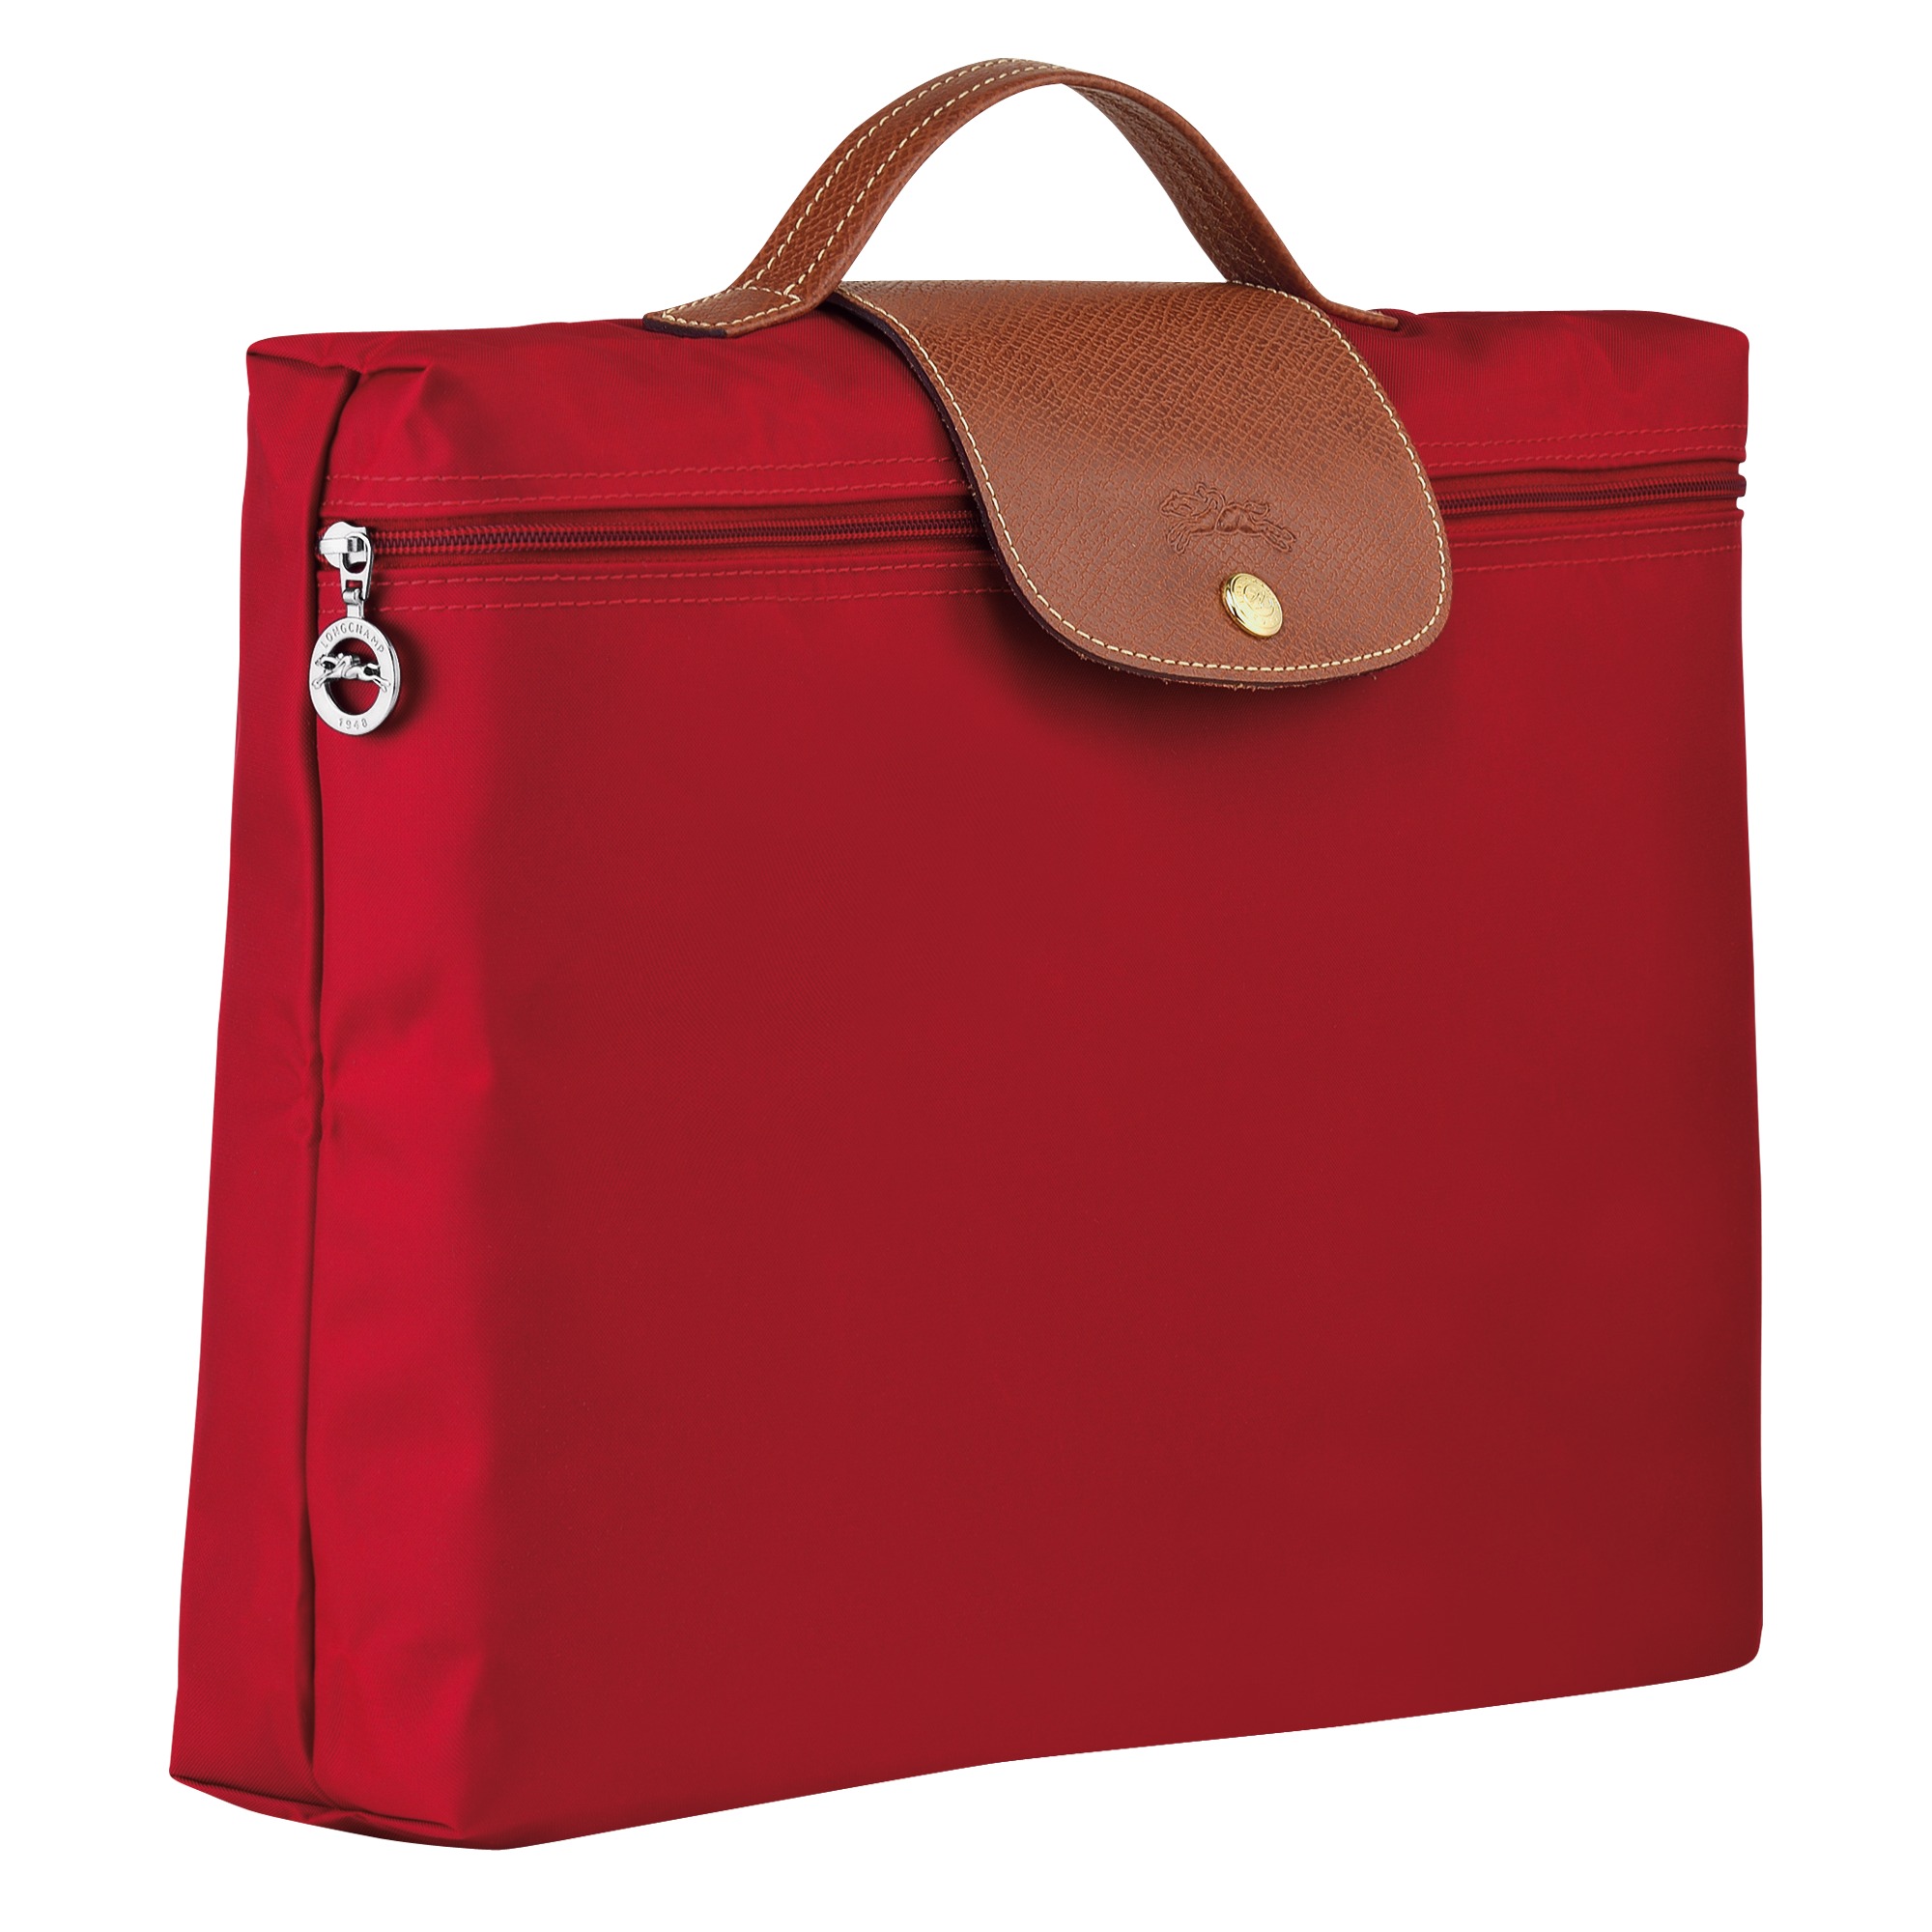 briefcase longchamp